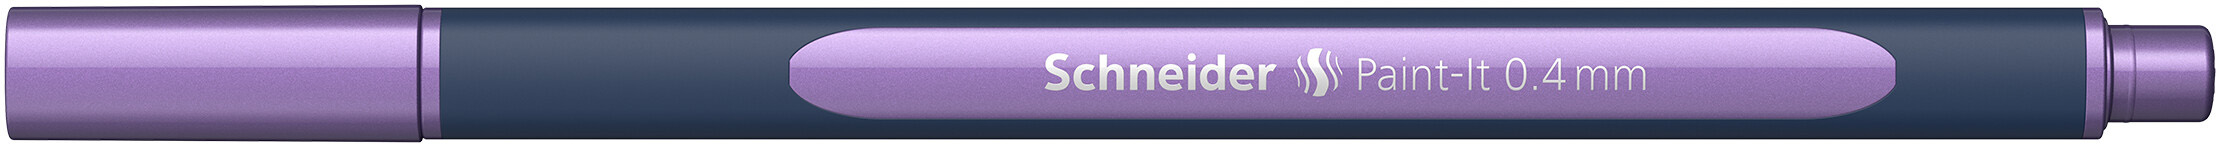 SCHNEIDER Roller Paint-it ML050011140 frosted violet metallic frosted violet metallic